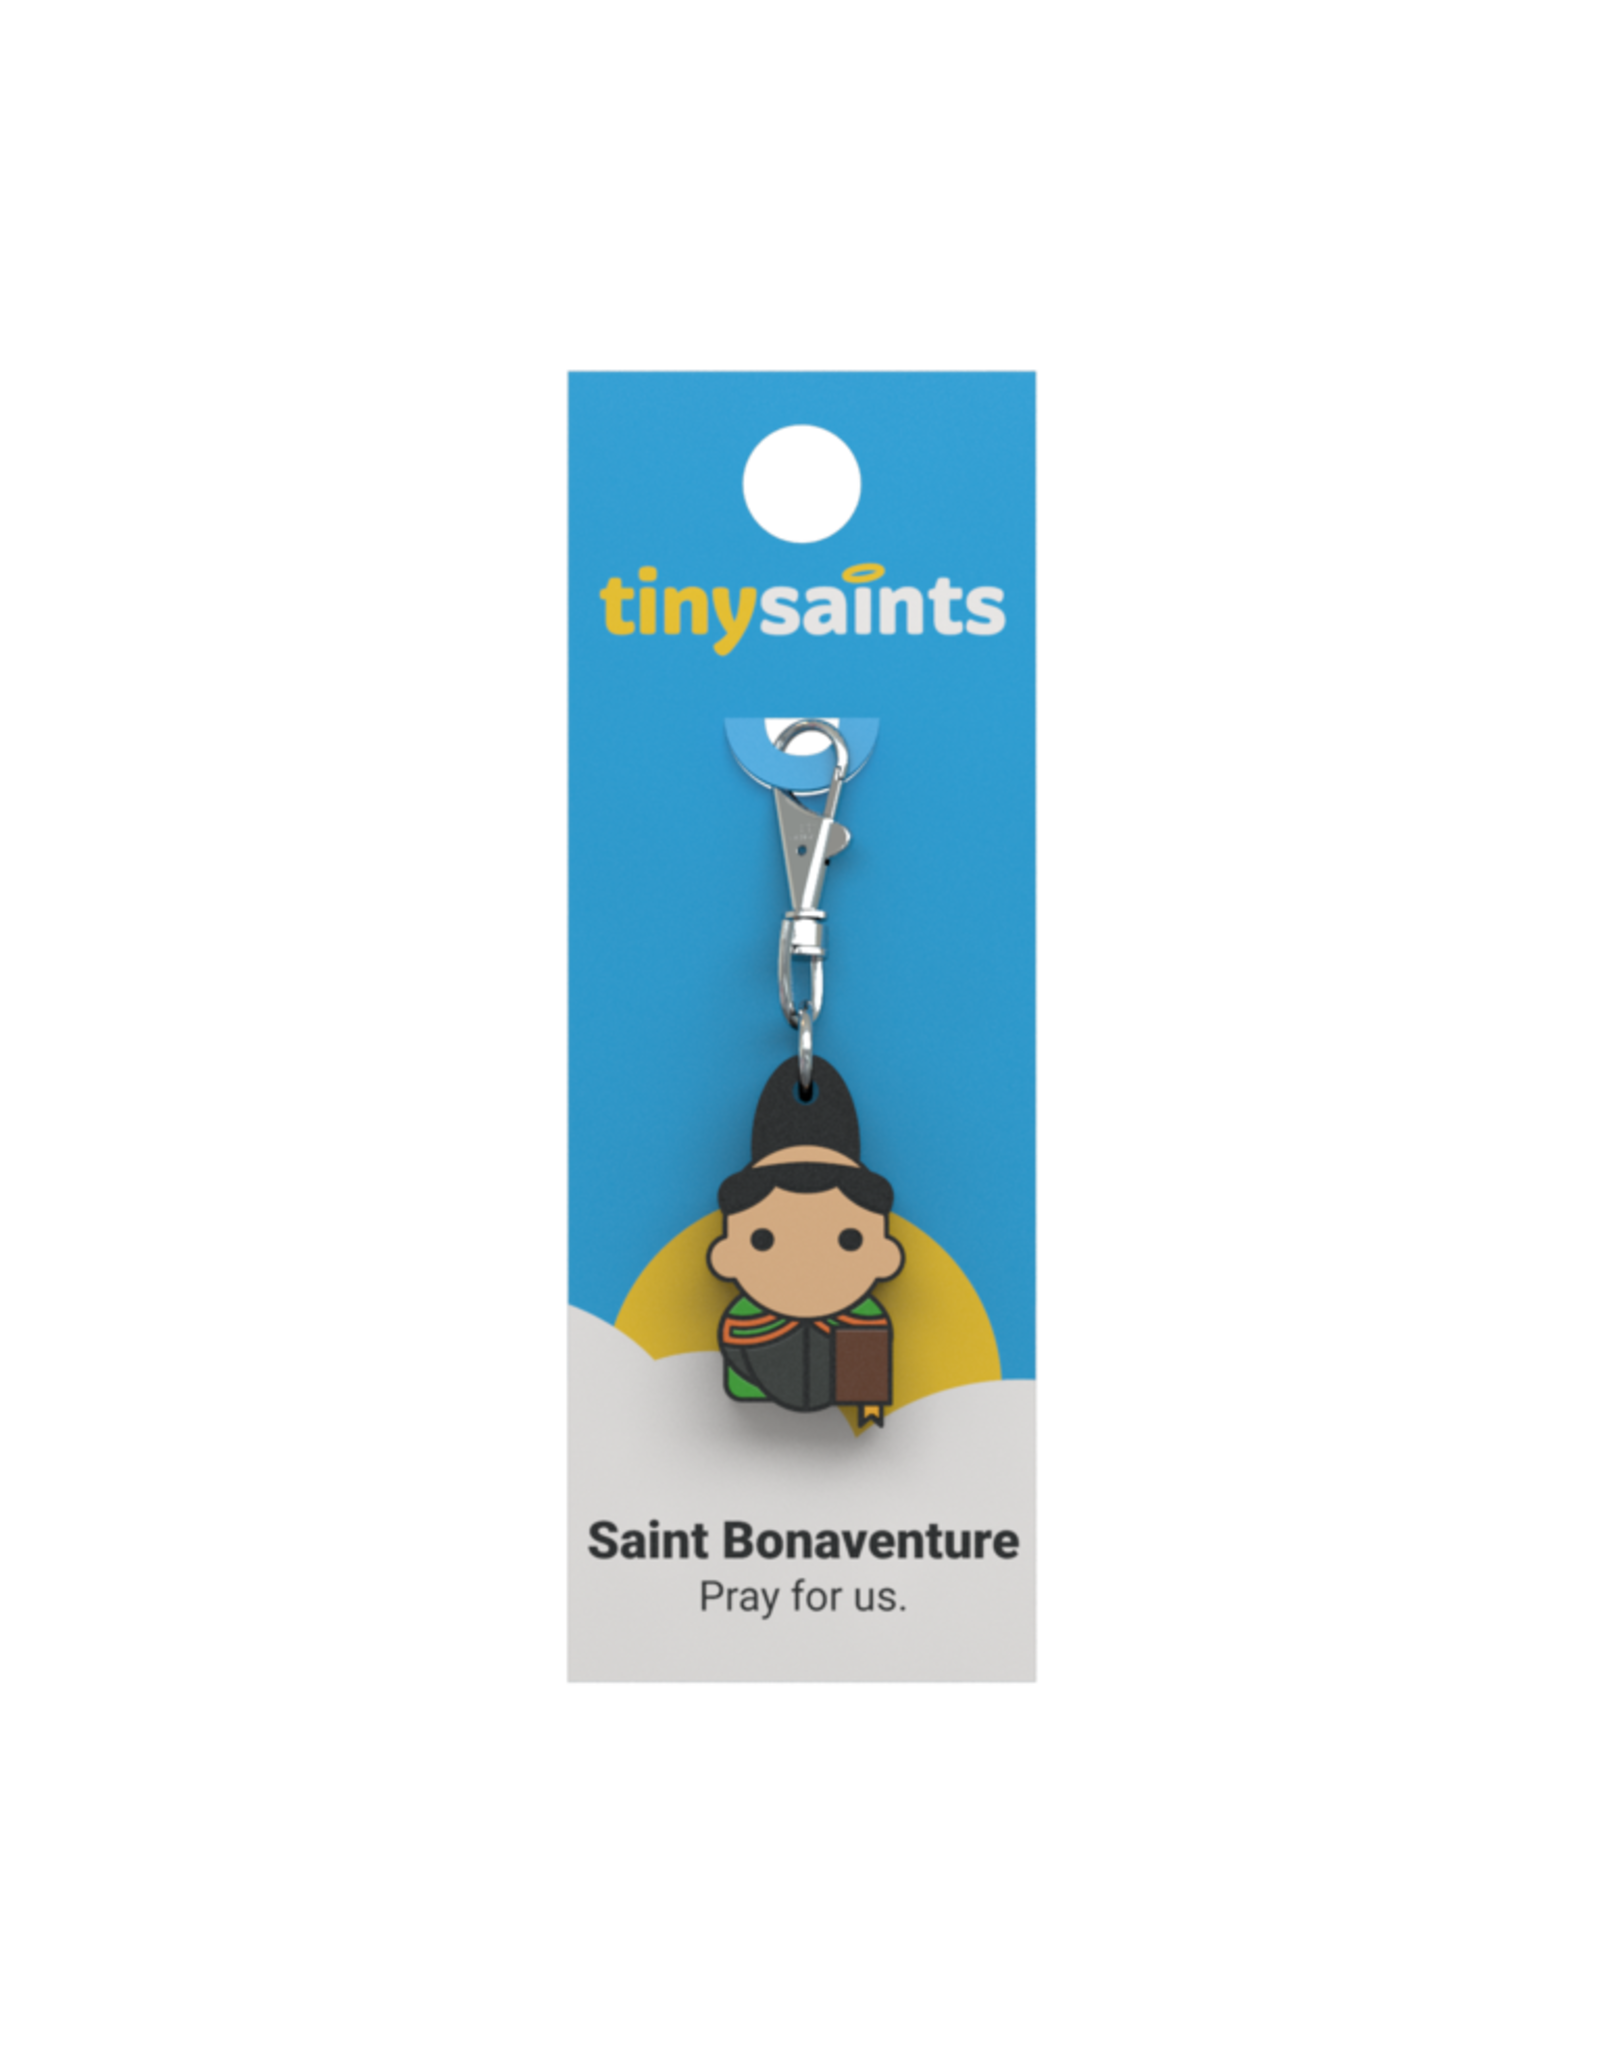 Tiny Saints Tiny Saints Charm - St. Bonaventure